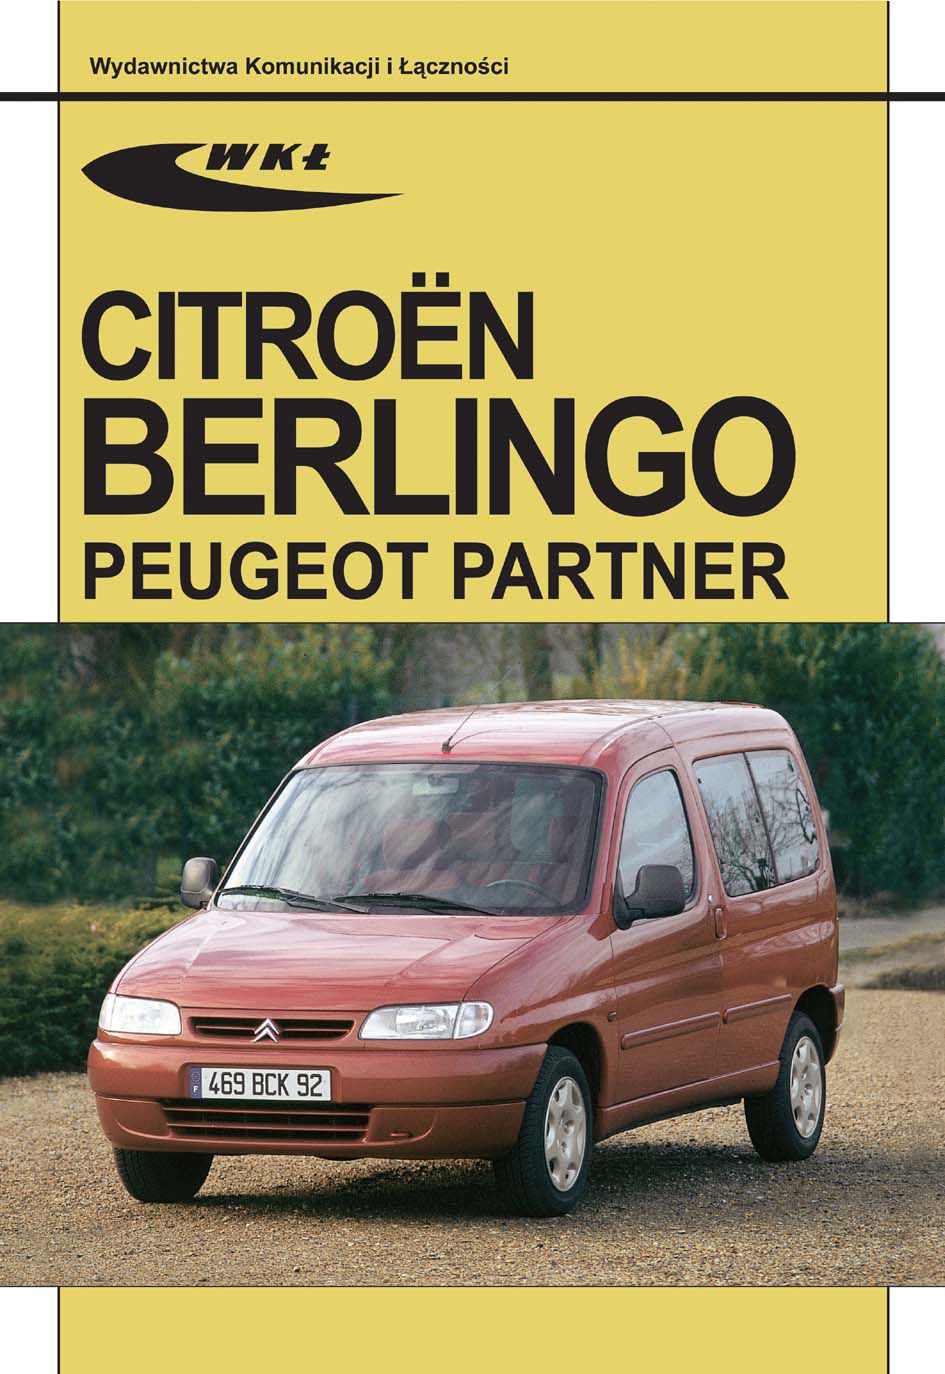 Citroen Berlingo, Peugeot Partner modele 1996-2001 30867 (9788320616200)